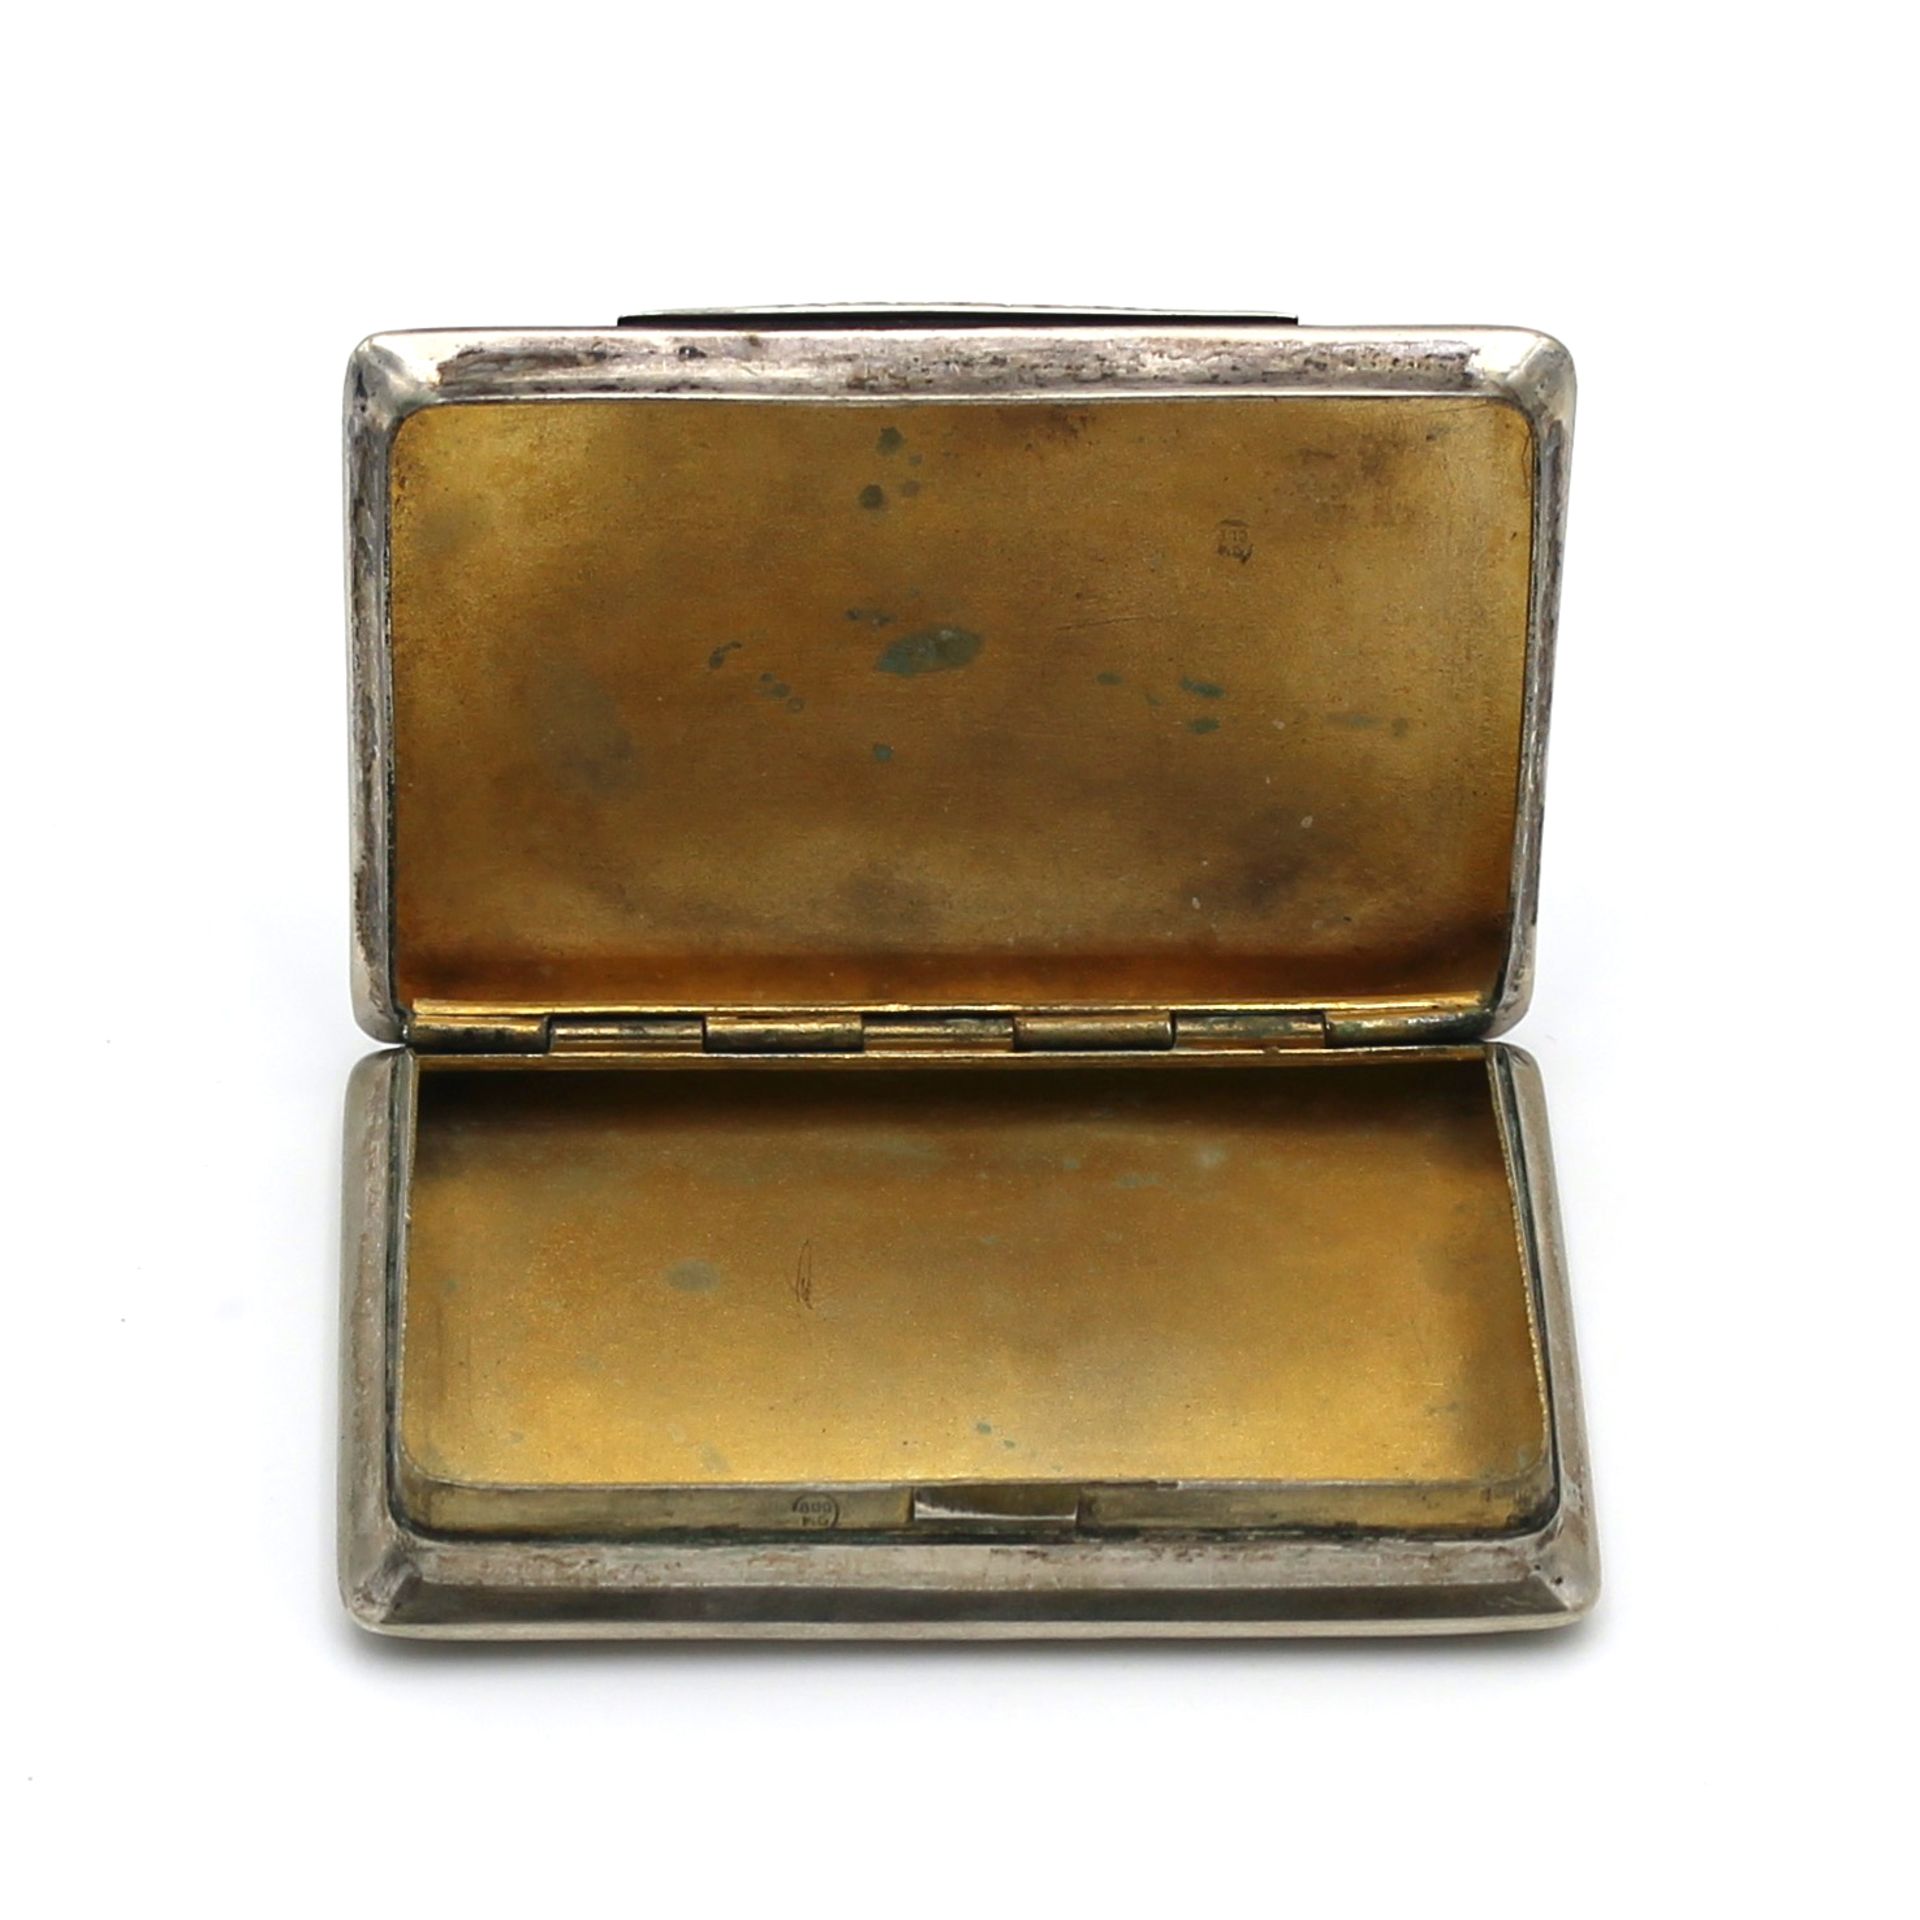 Piccola scatola - Small box - Image 2 of 2